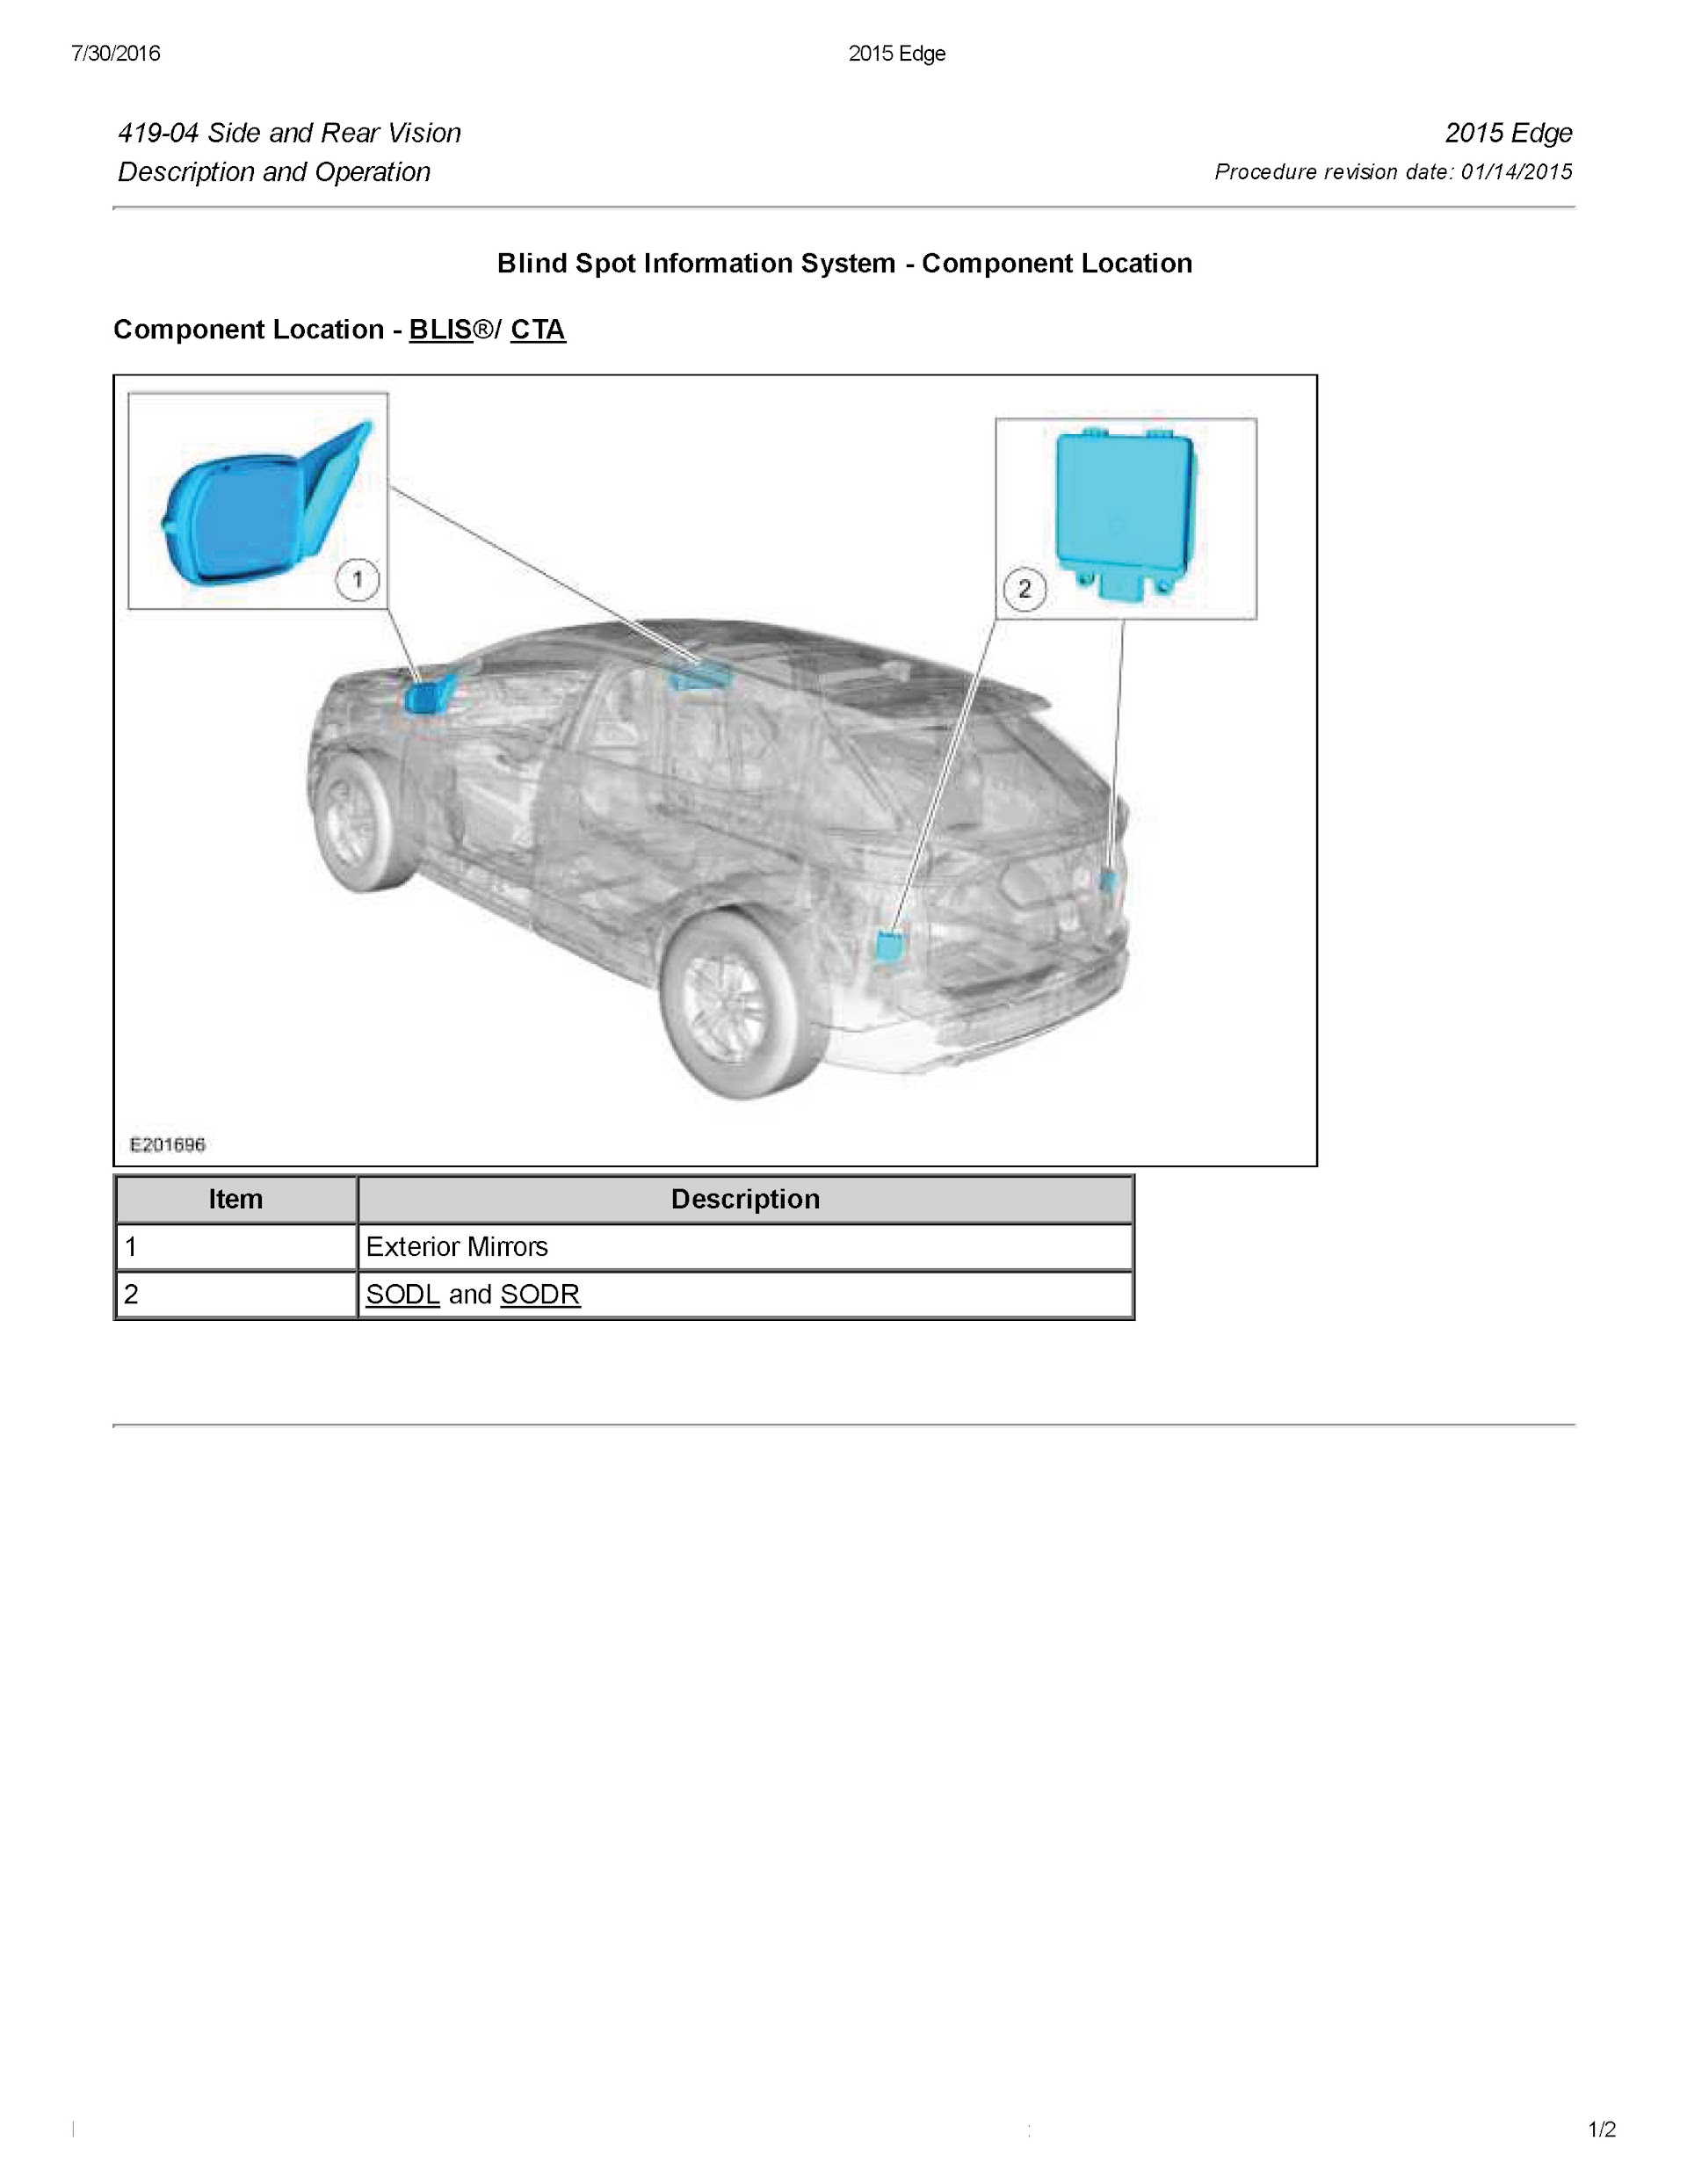 2018 Ford Edge (Endura) Repair Manual Blind Spot Information System